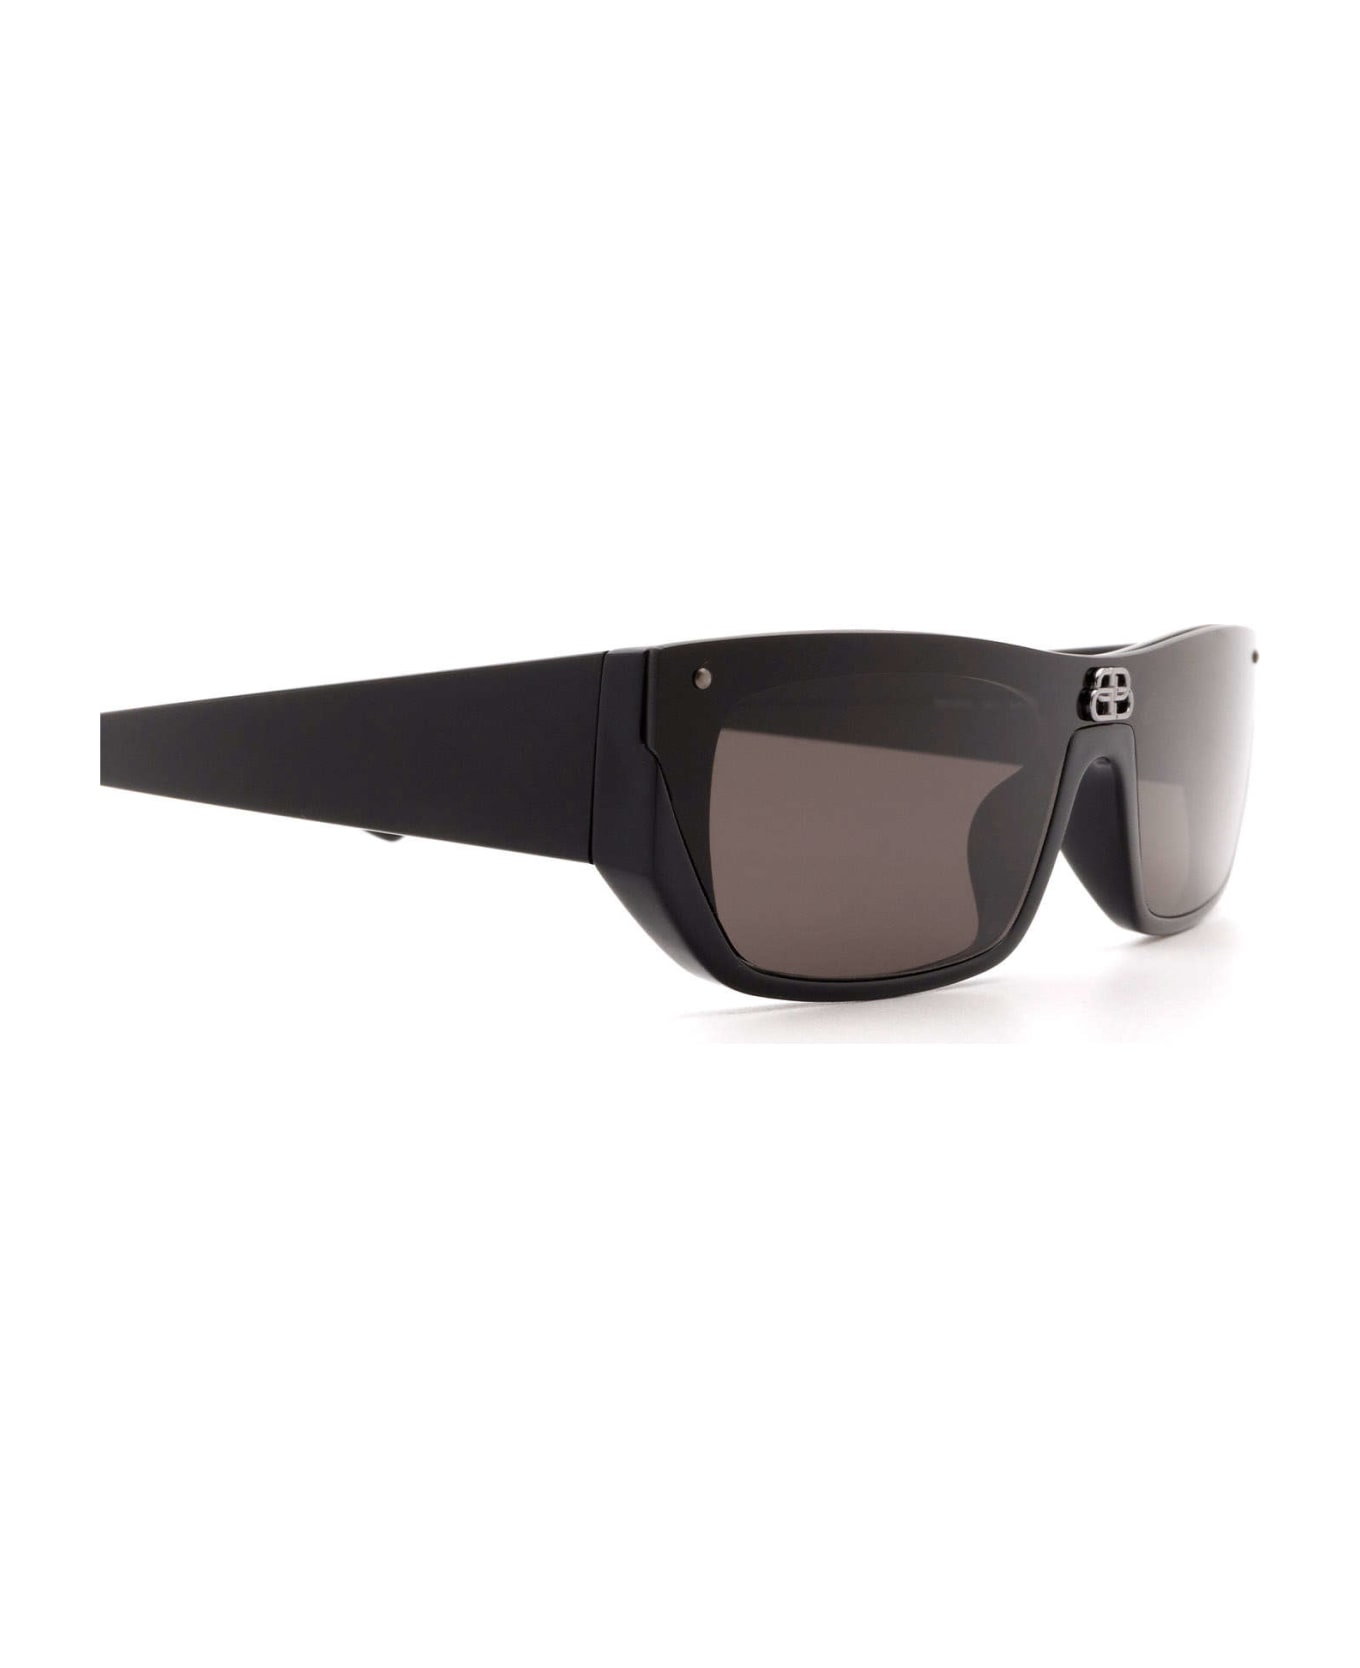 Balenciaga Eyewear Bb0080s Sunglasses - 001 BLACK BLACK GREY